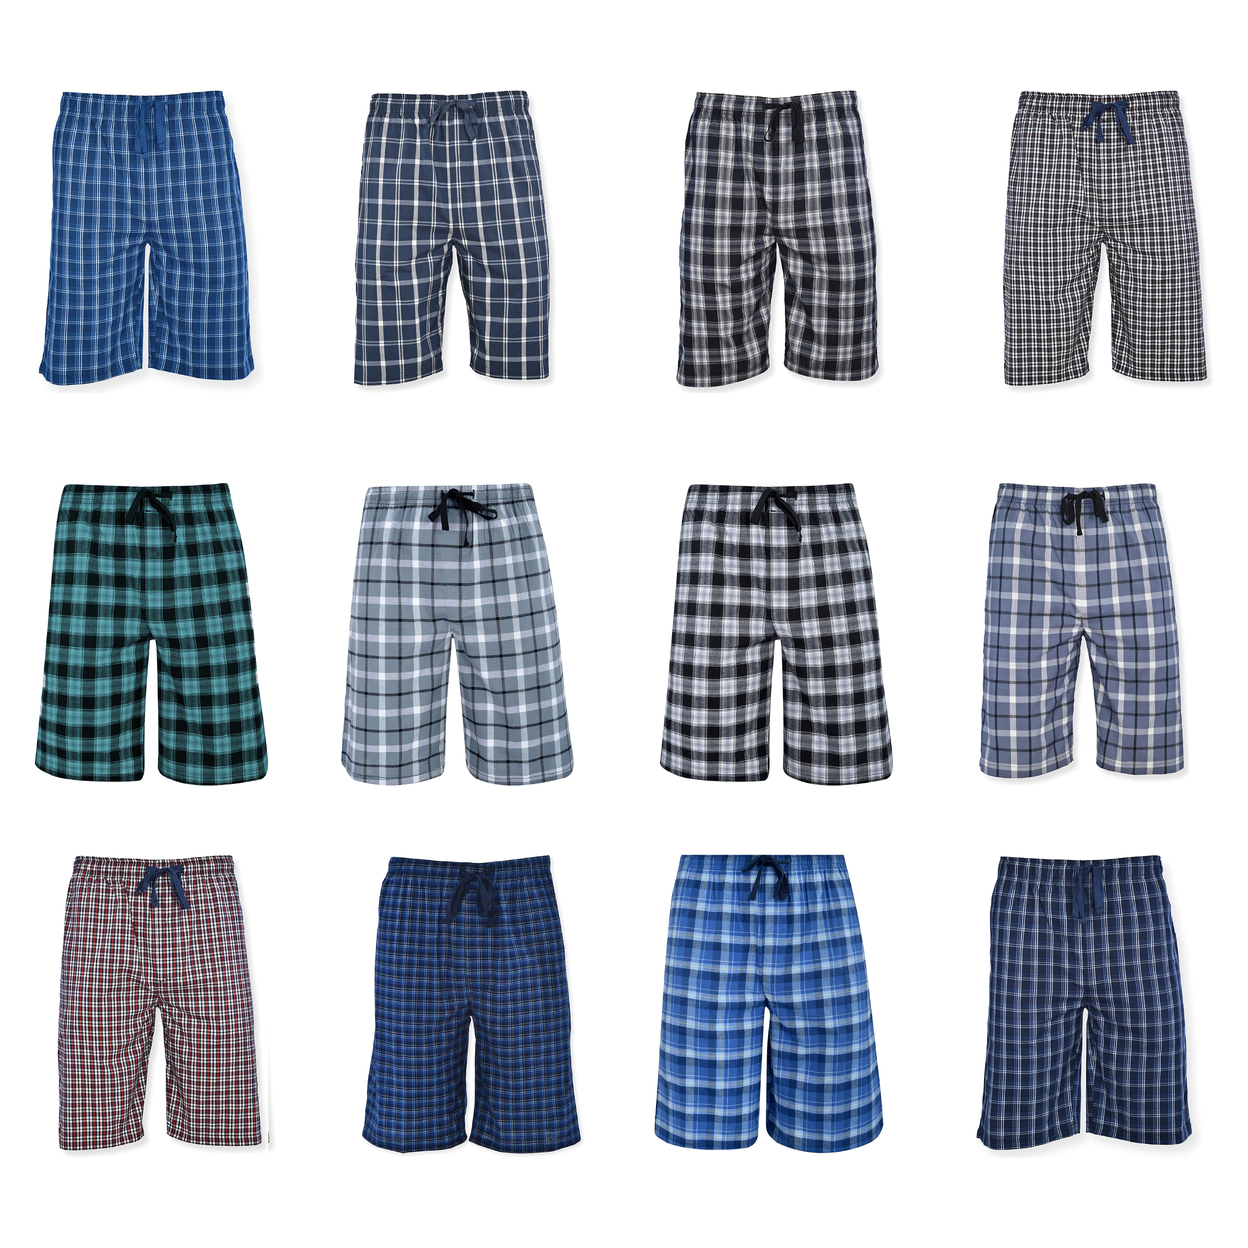 Bargain Hunters Multi-Pack: Men's Ultra Soft Plaid Lounge Pajama Sleep Wear Shorts